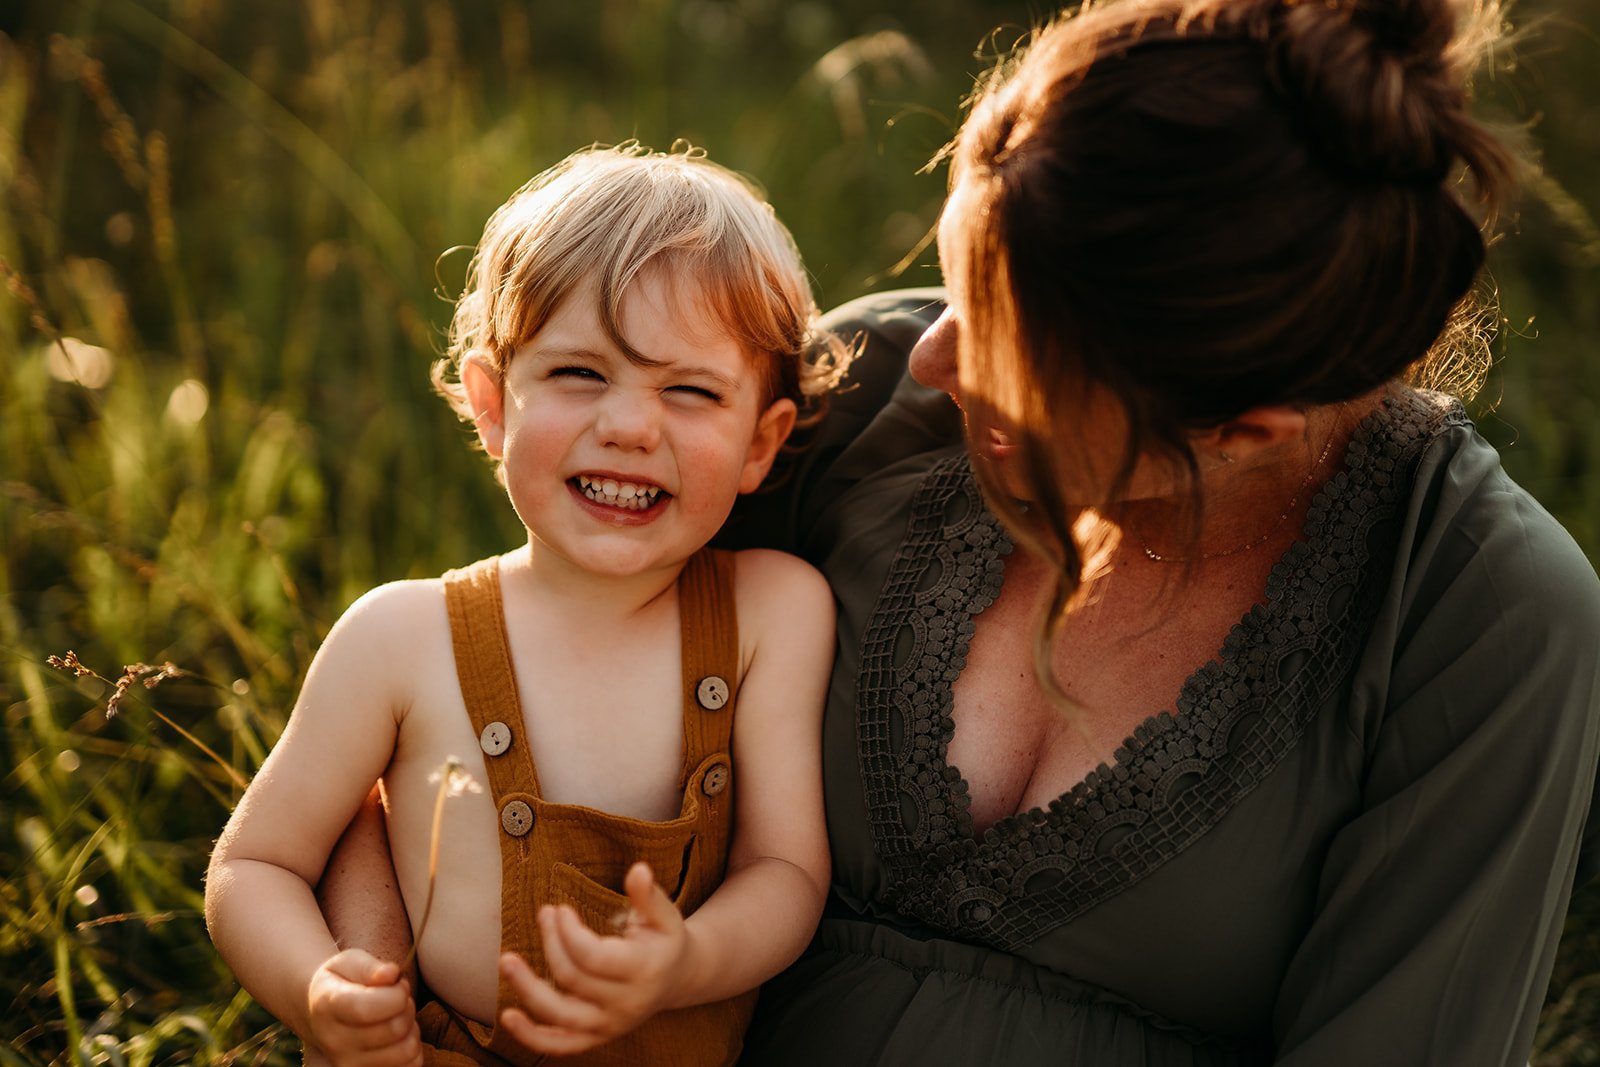 Little boy smiling mom lap.jpg